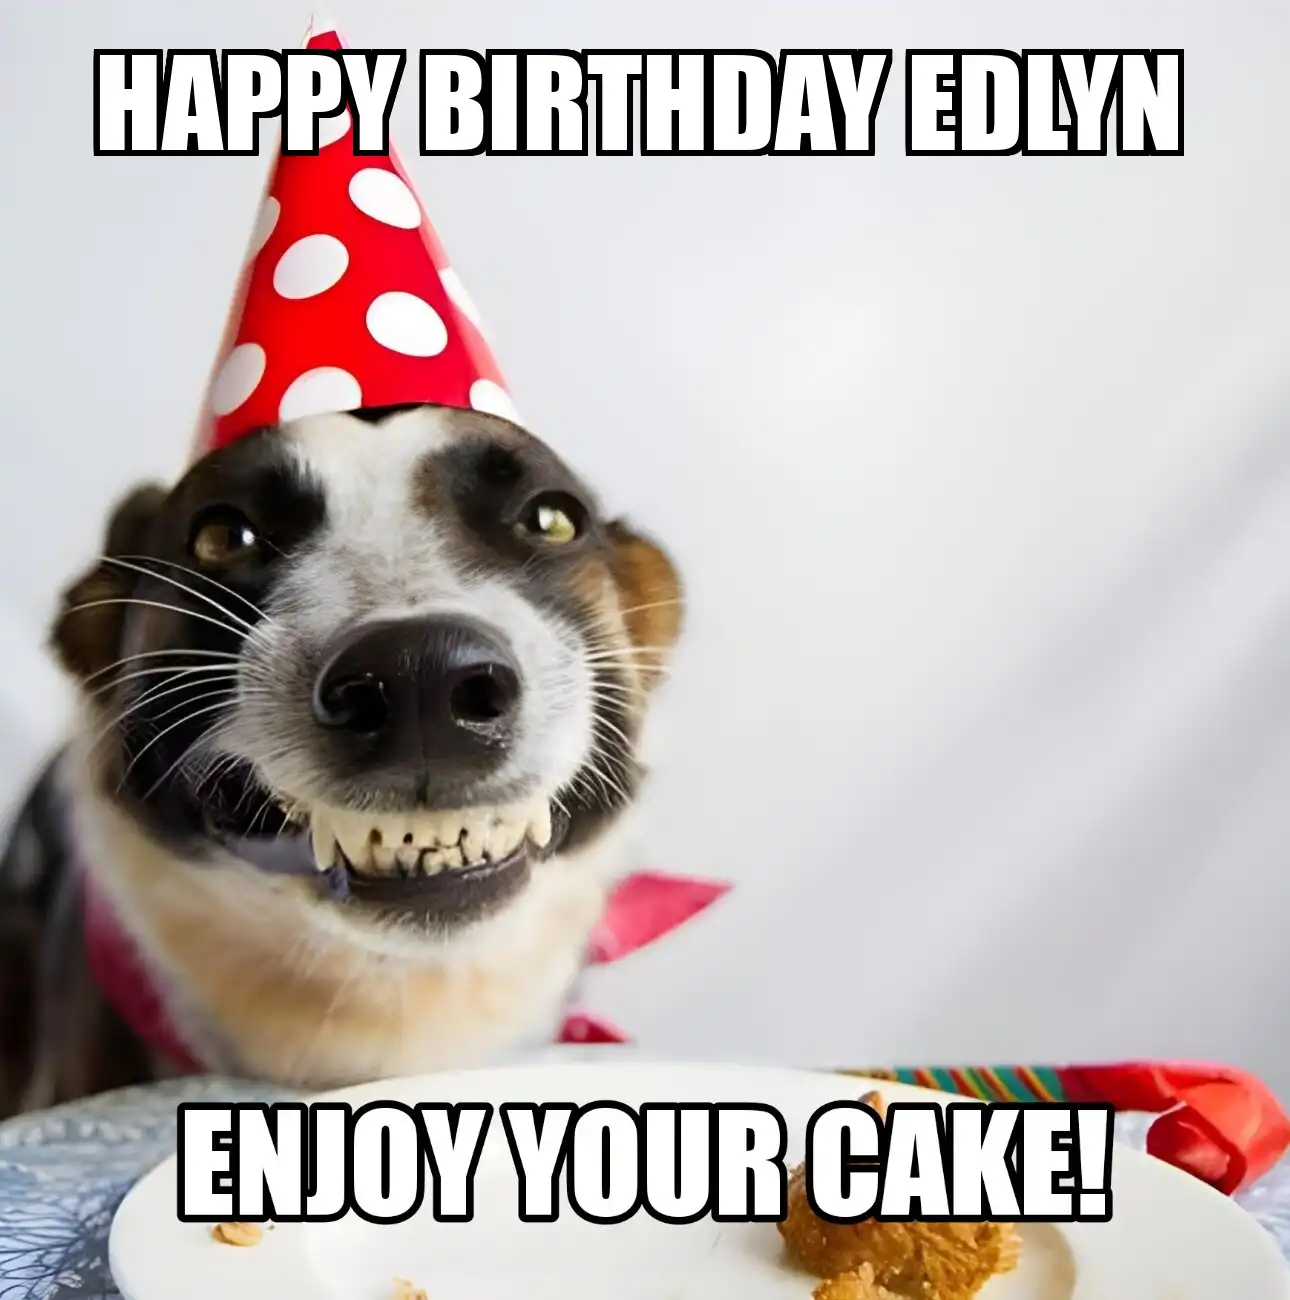 Happy Birthday Edlyn Enjoy Your Cake Dog Meme